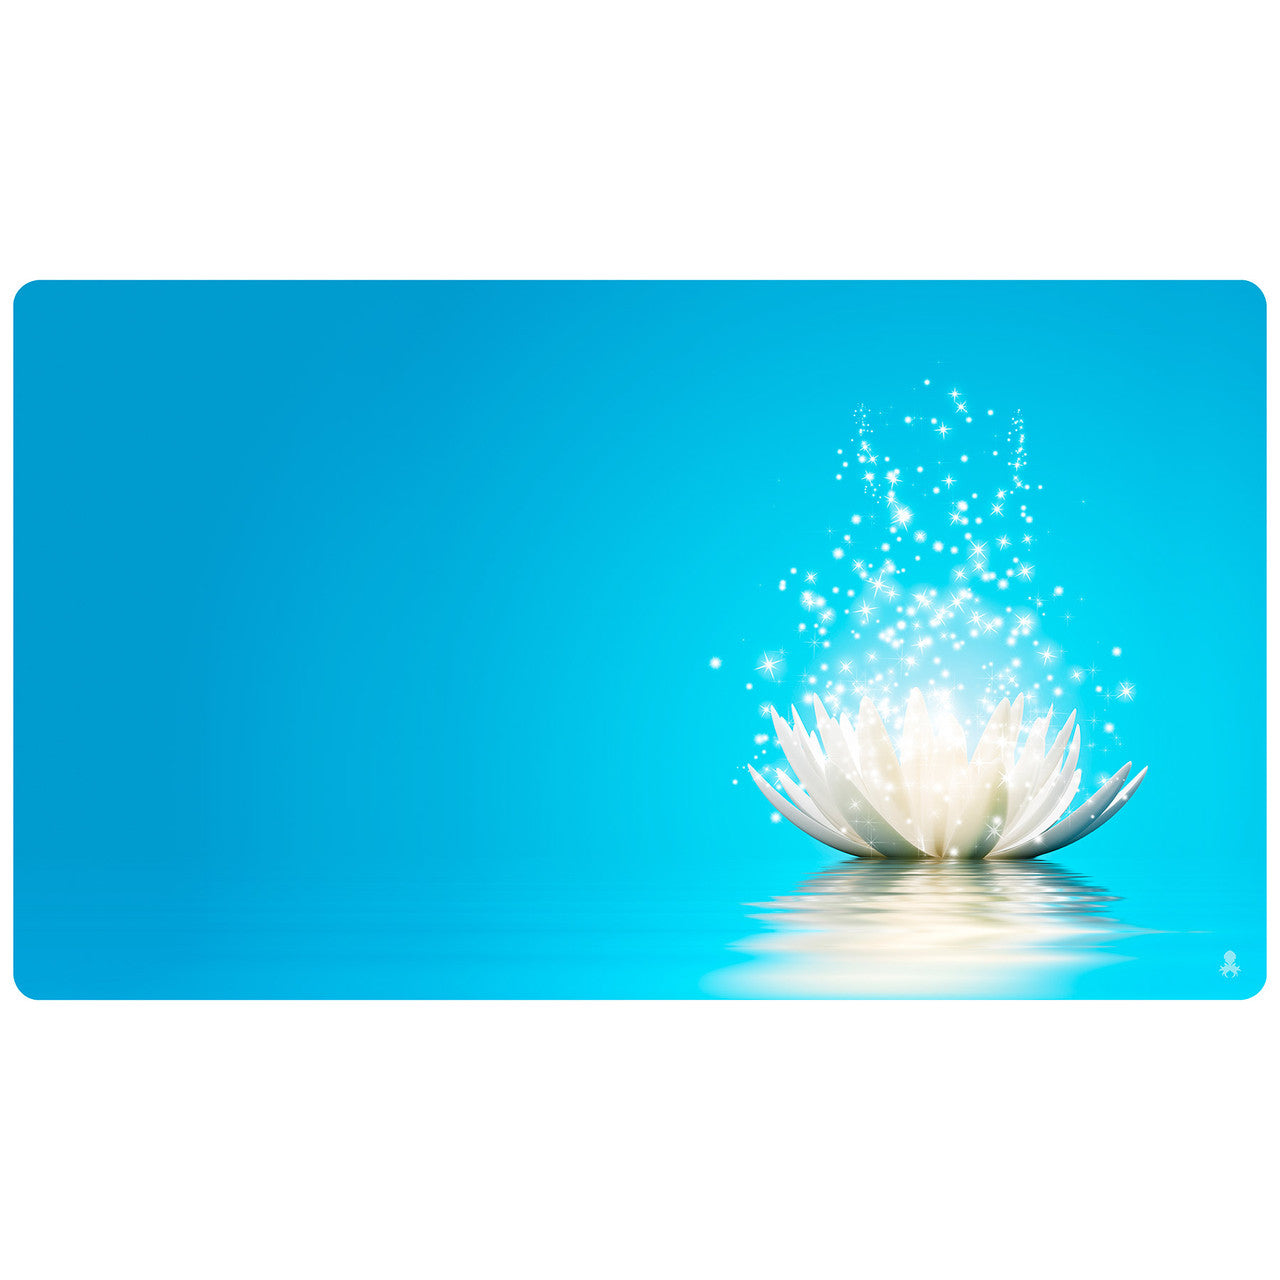 Lotus Flower Playmat